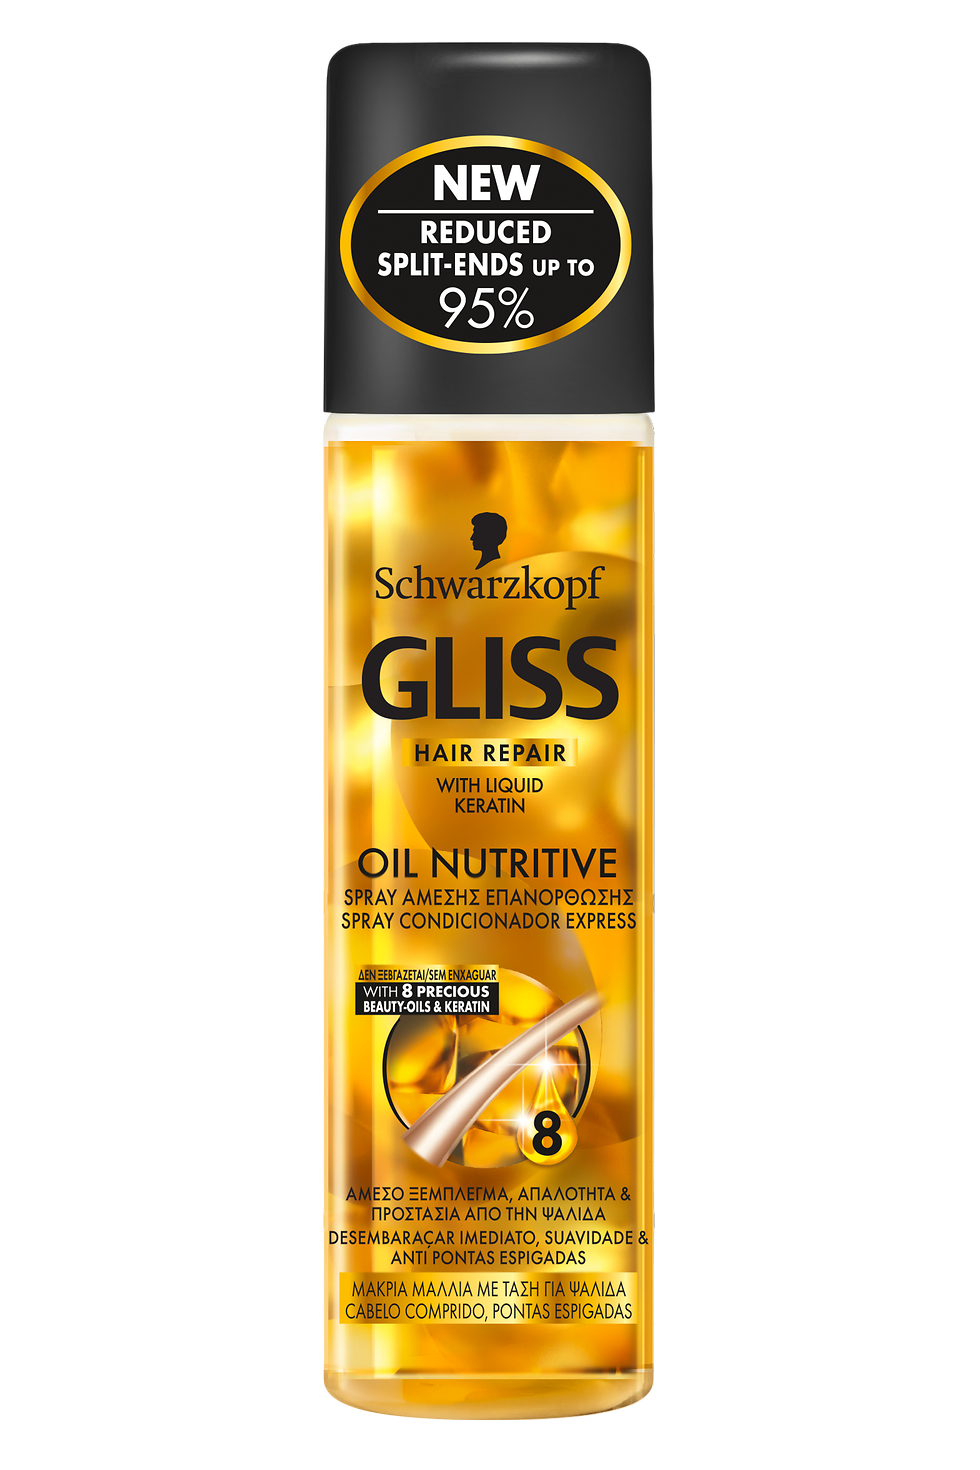 GLISS SPRAY CONDICIONADOR OIL NUTRITIVE